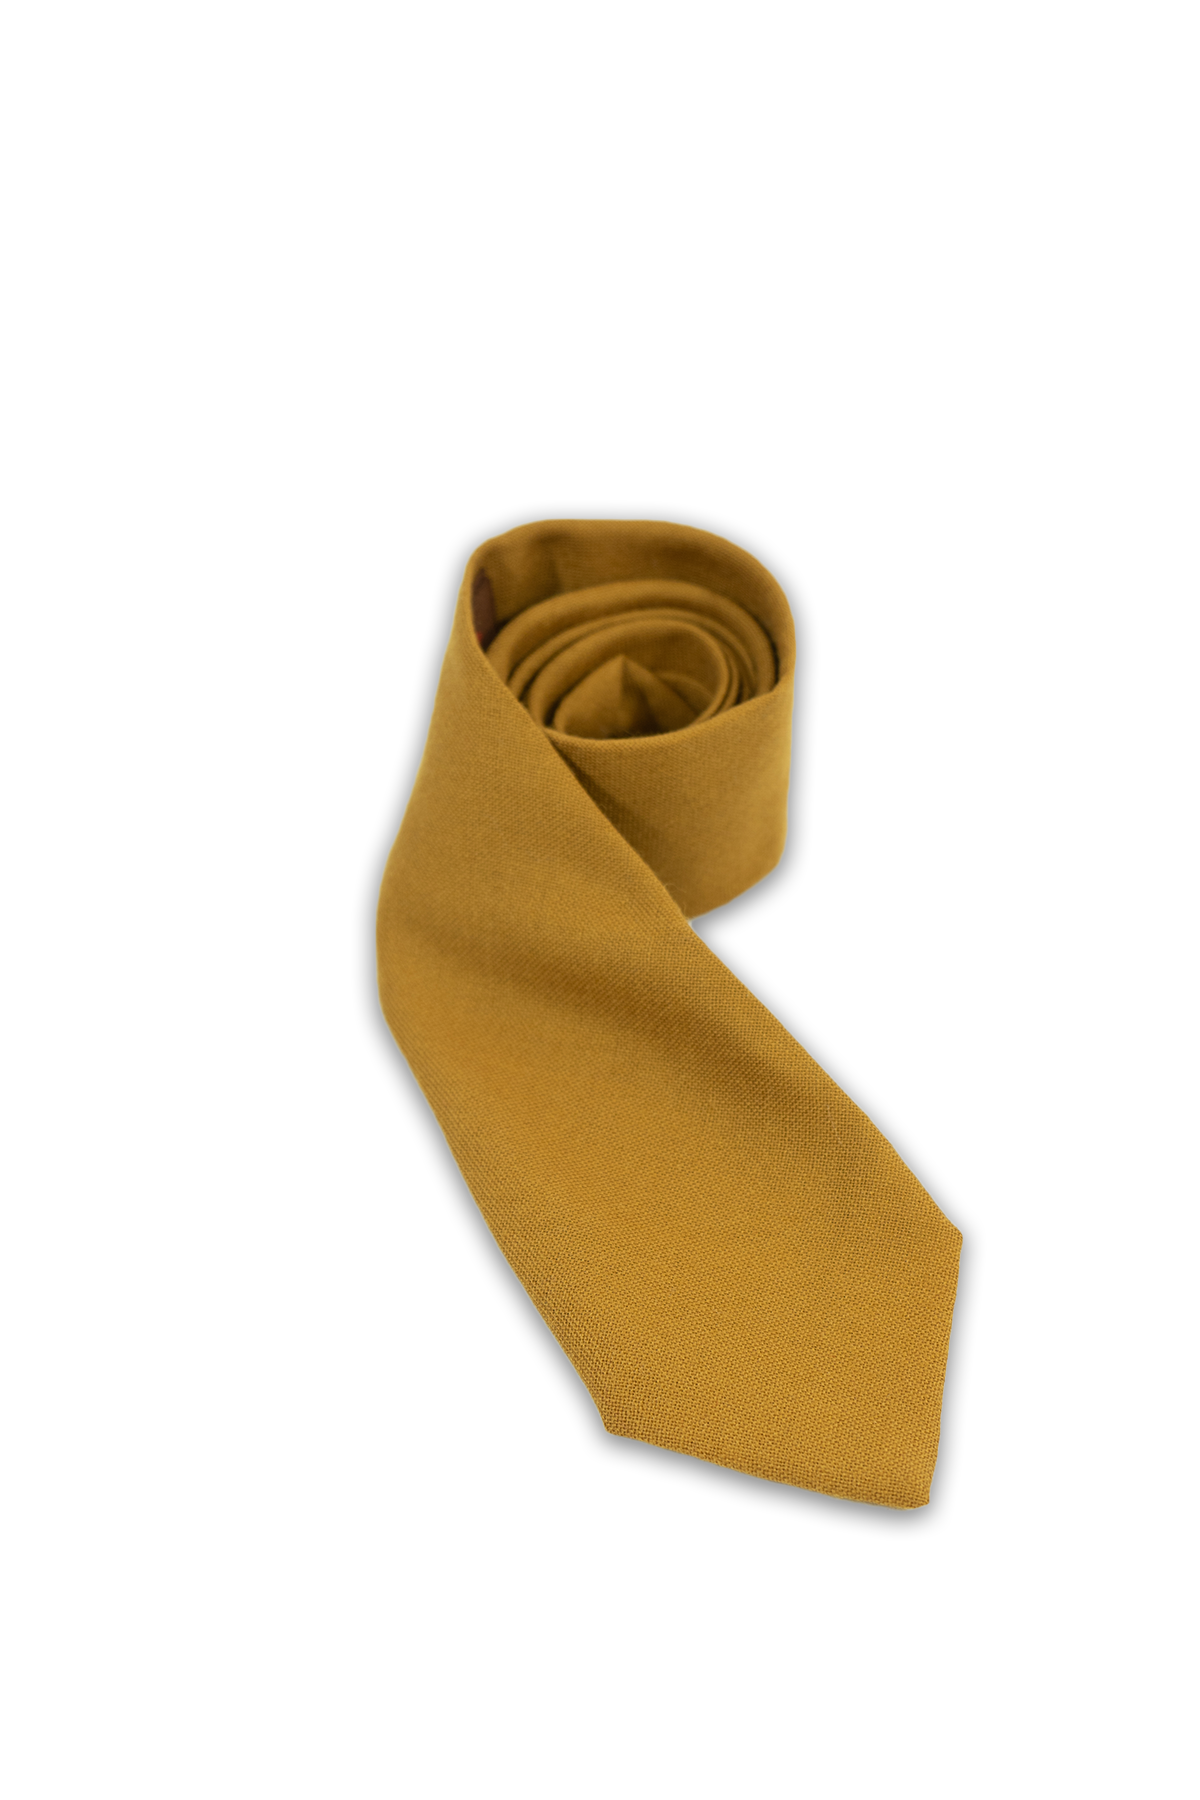 Gold Hire Tie